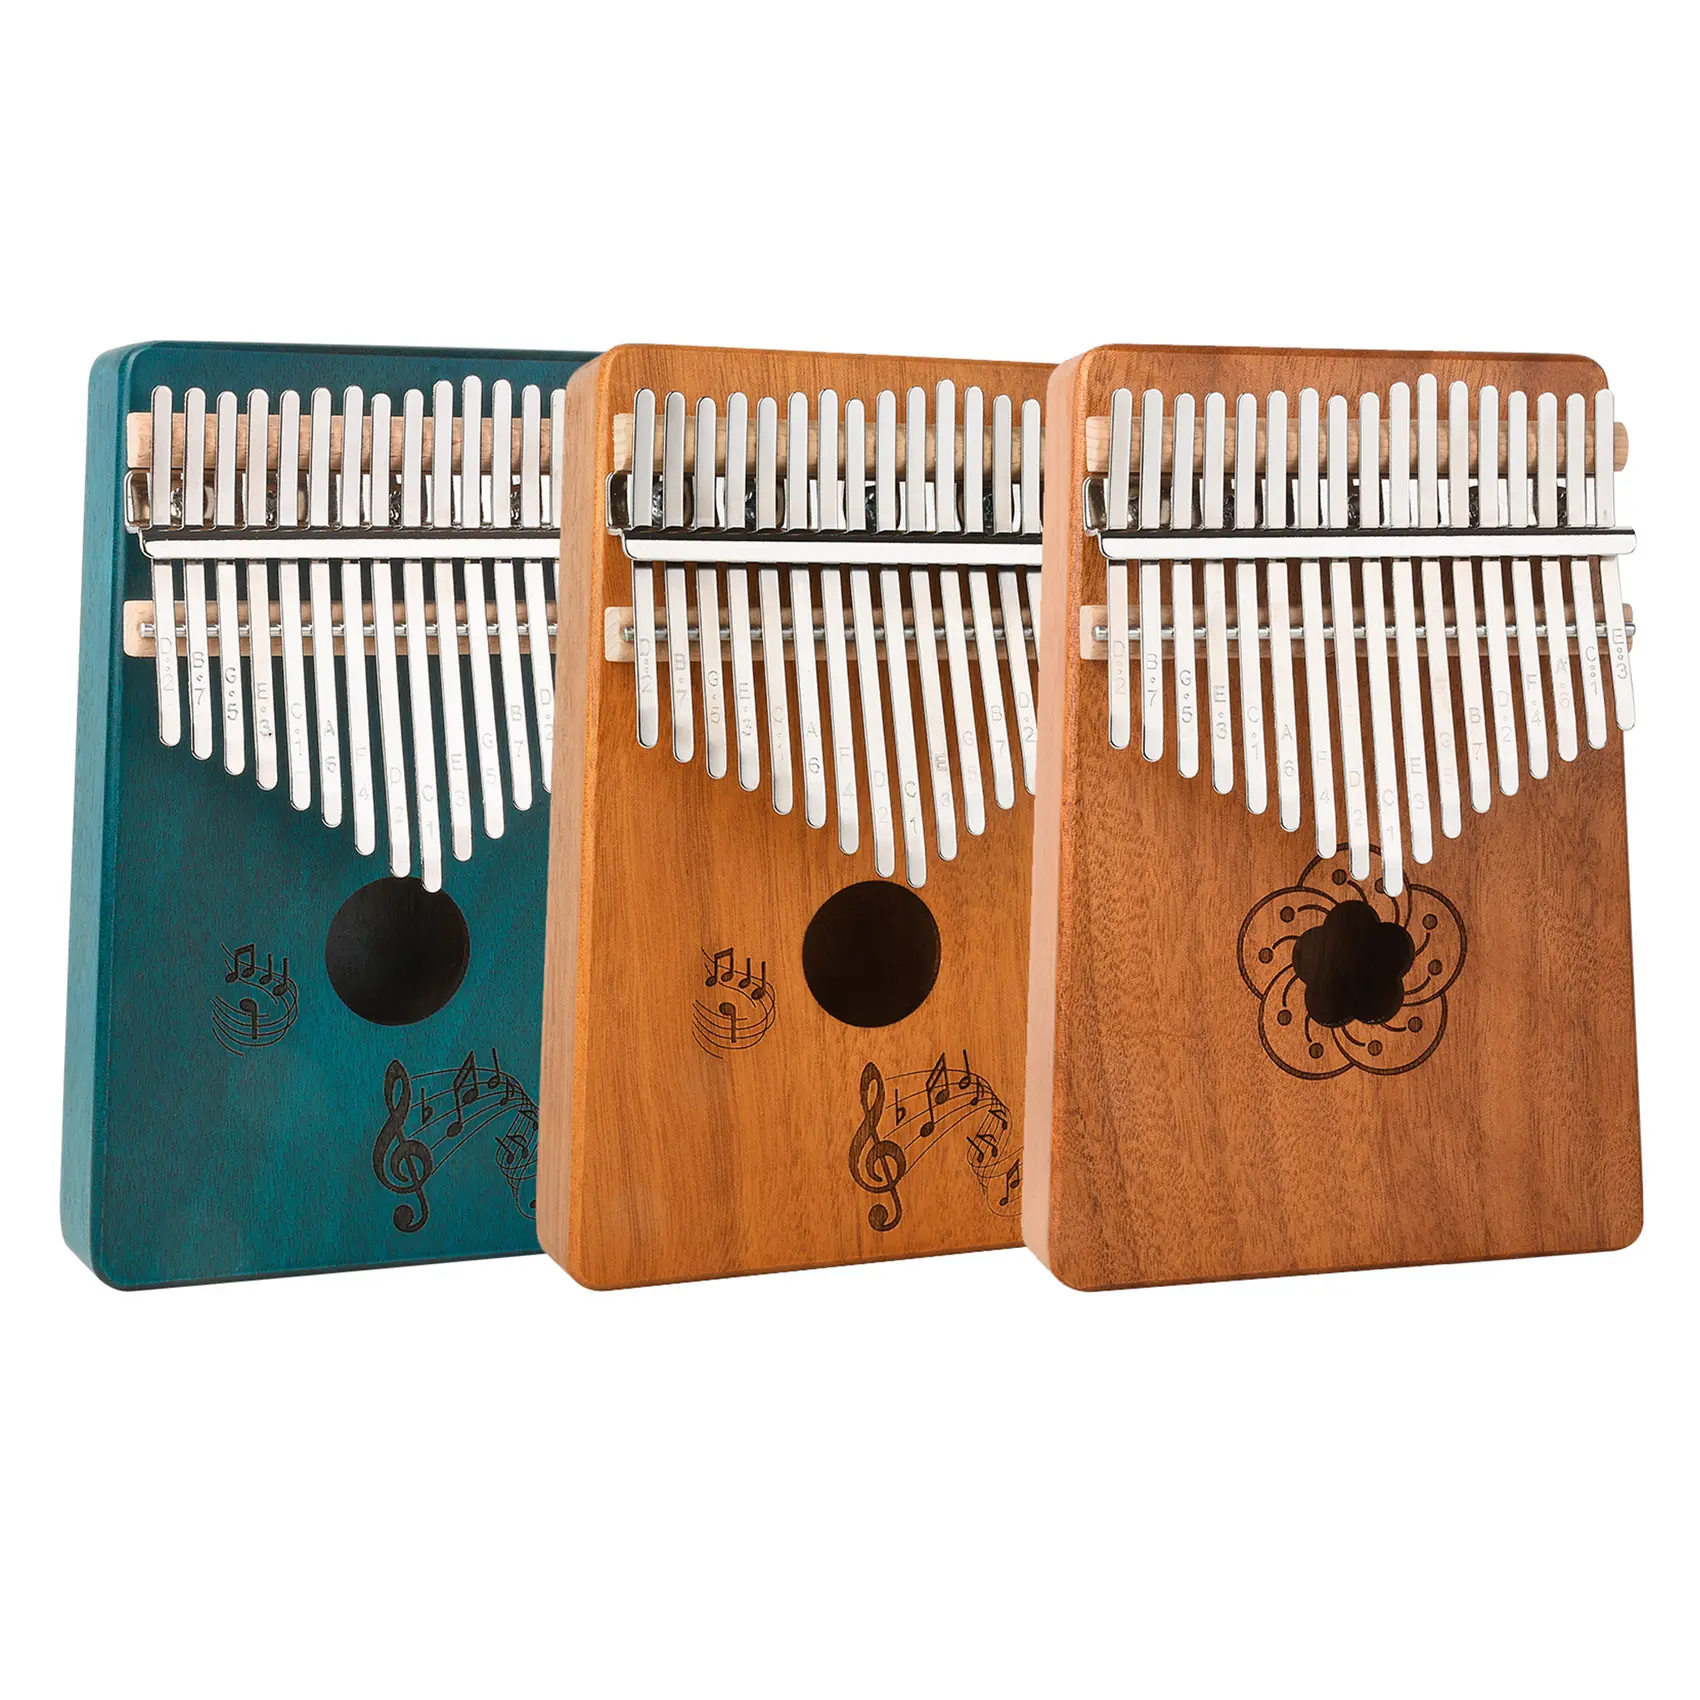 17 Keys Kalimba Thumb Piano Wood Mahogany Mbira Body Musical Instruments with Sheet Music Tune Hammer Festival Gift